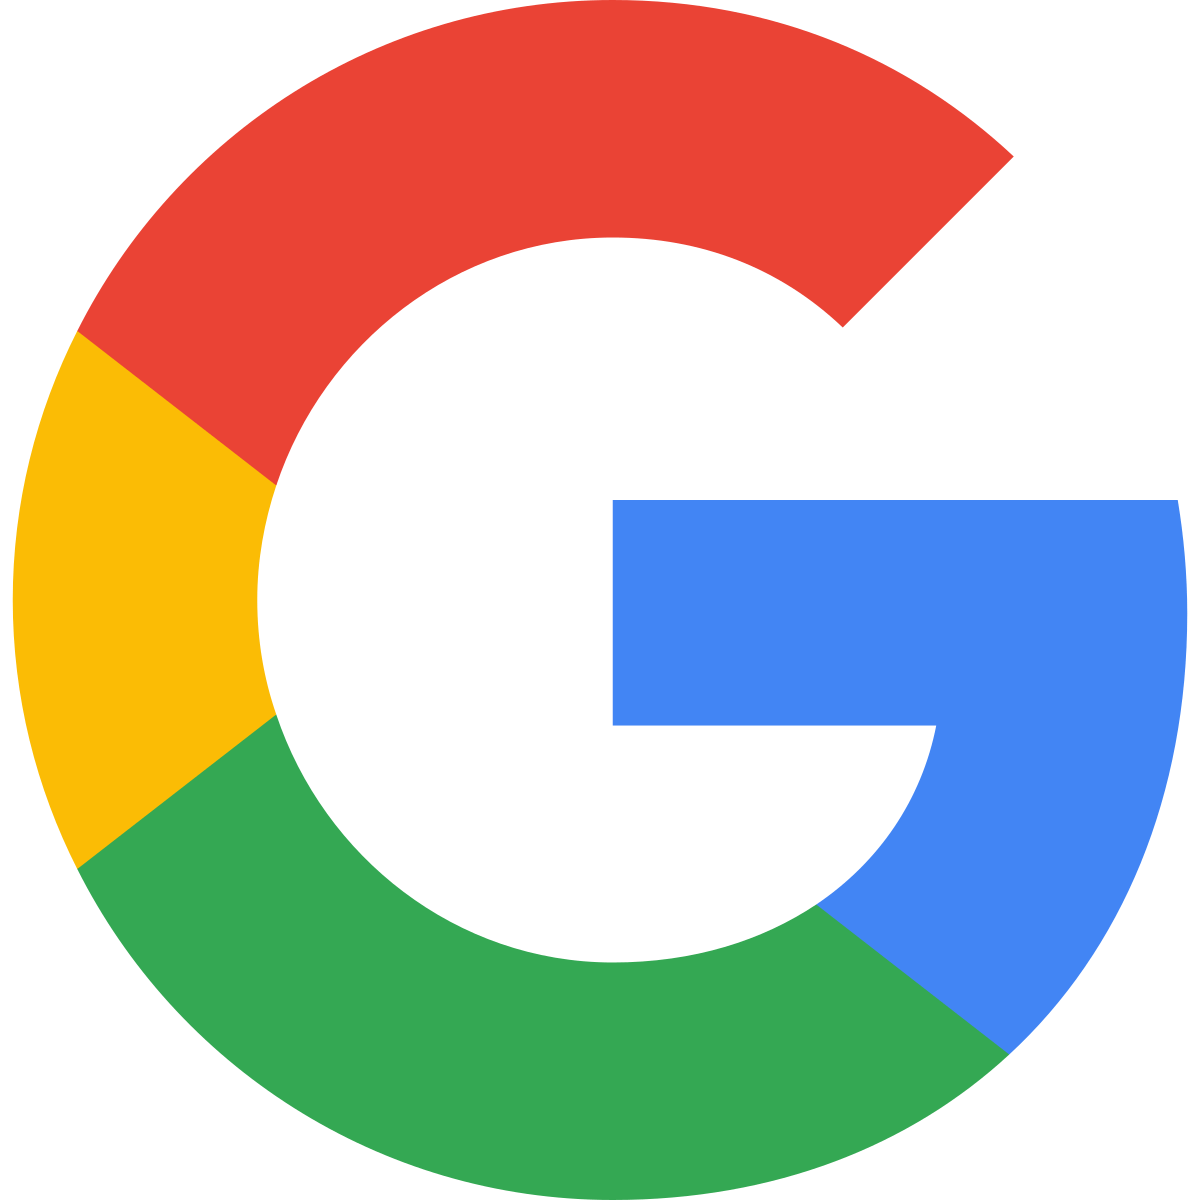 Google Digital Garage